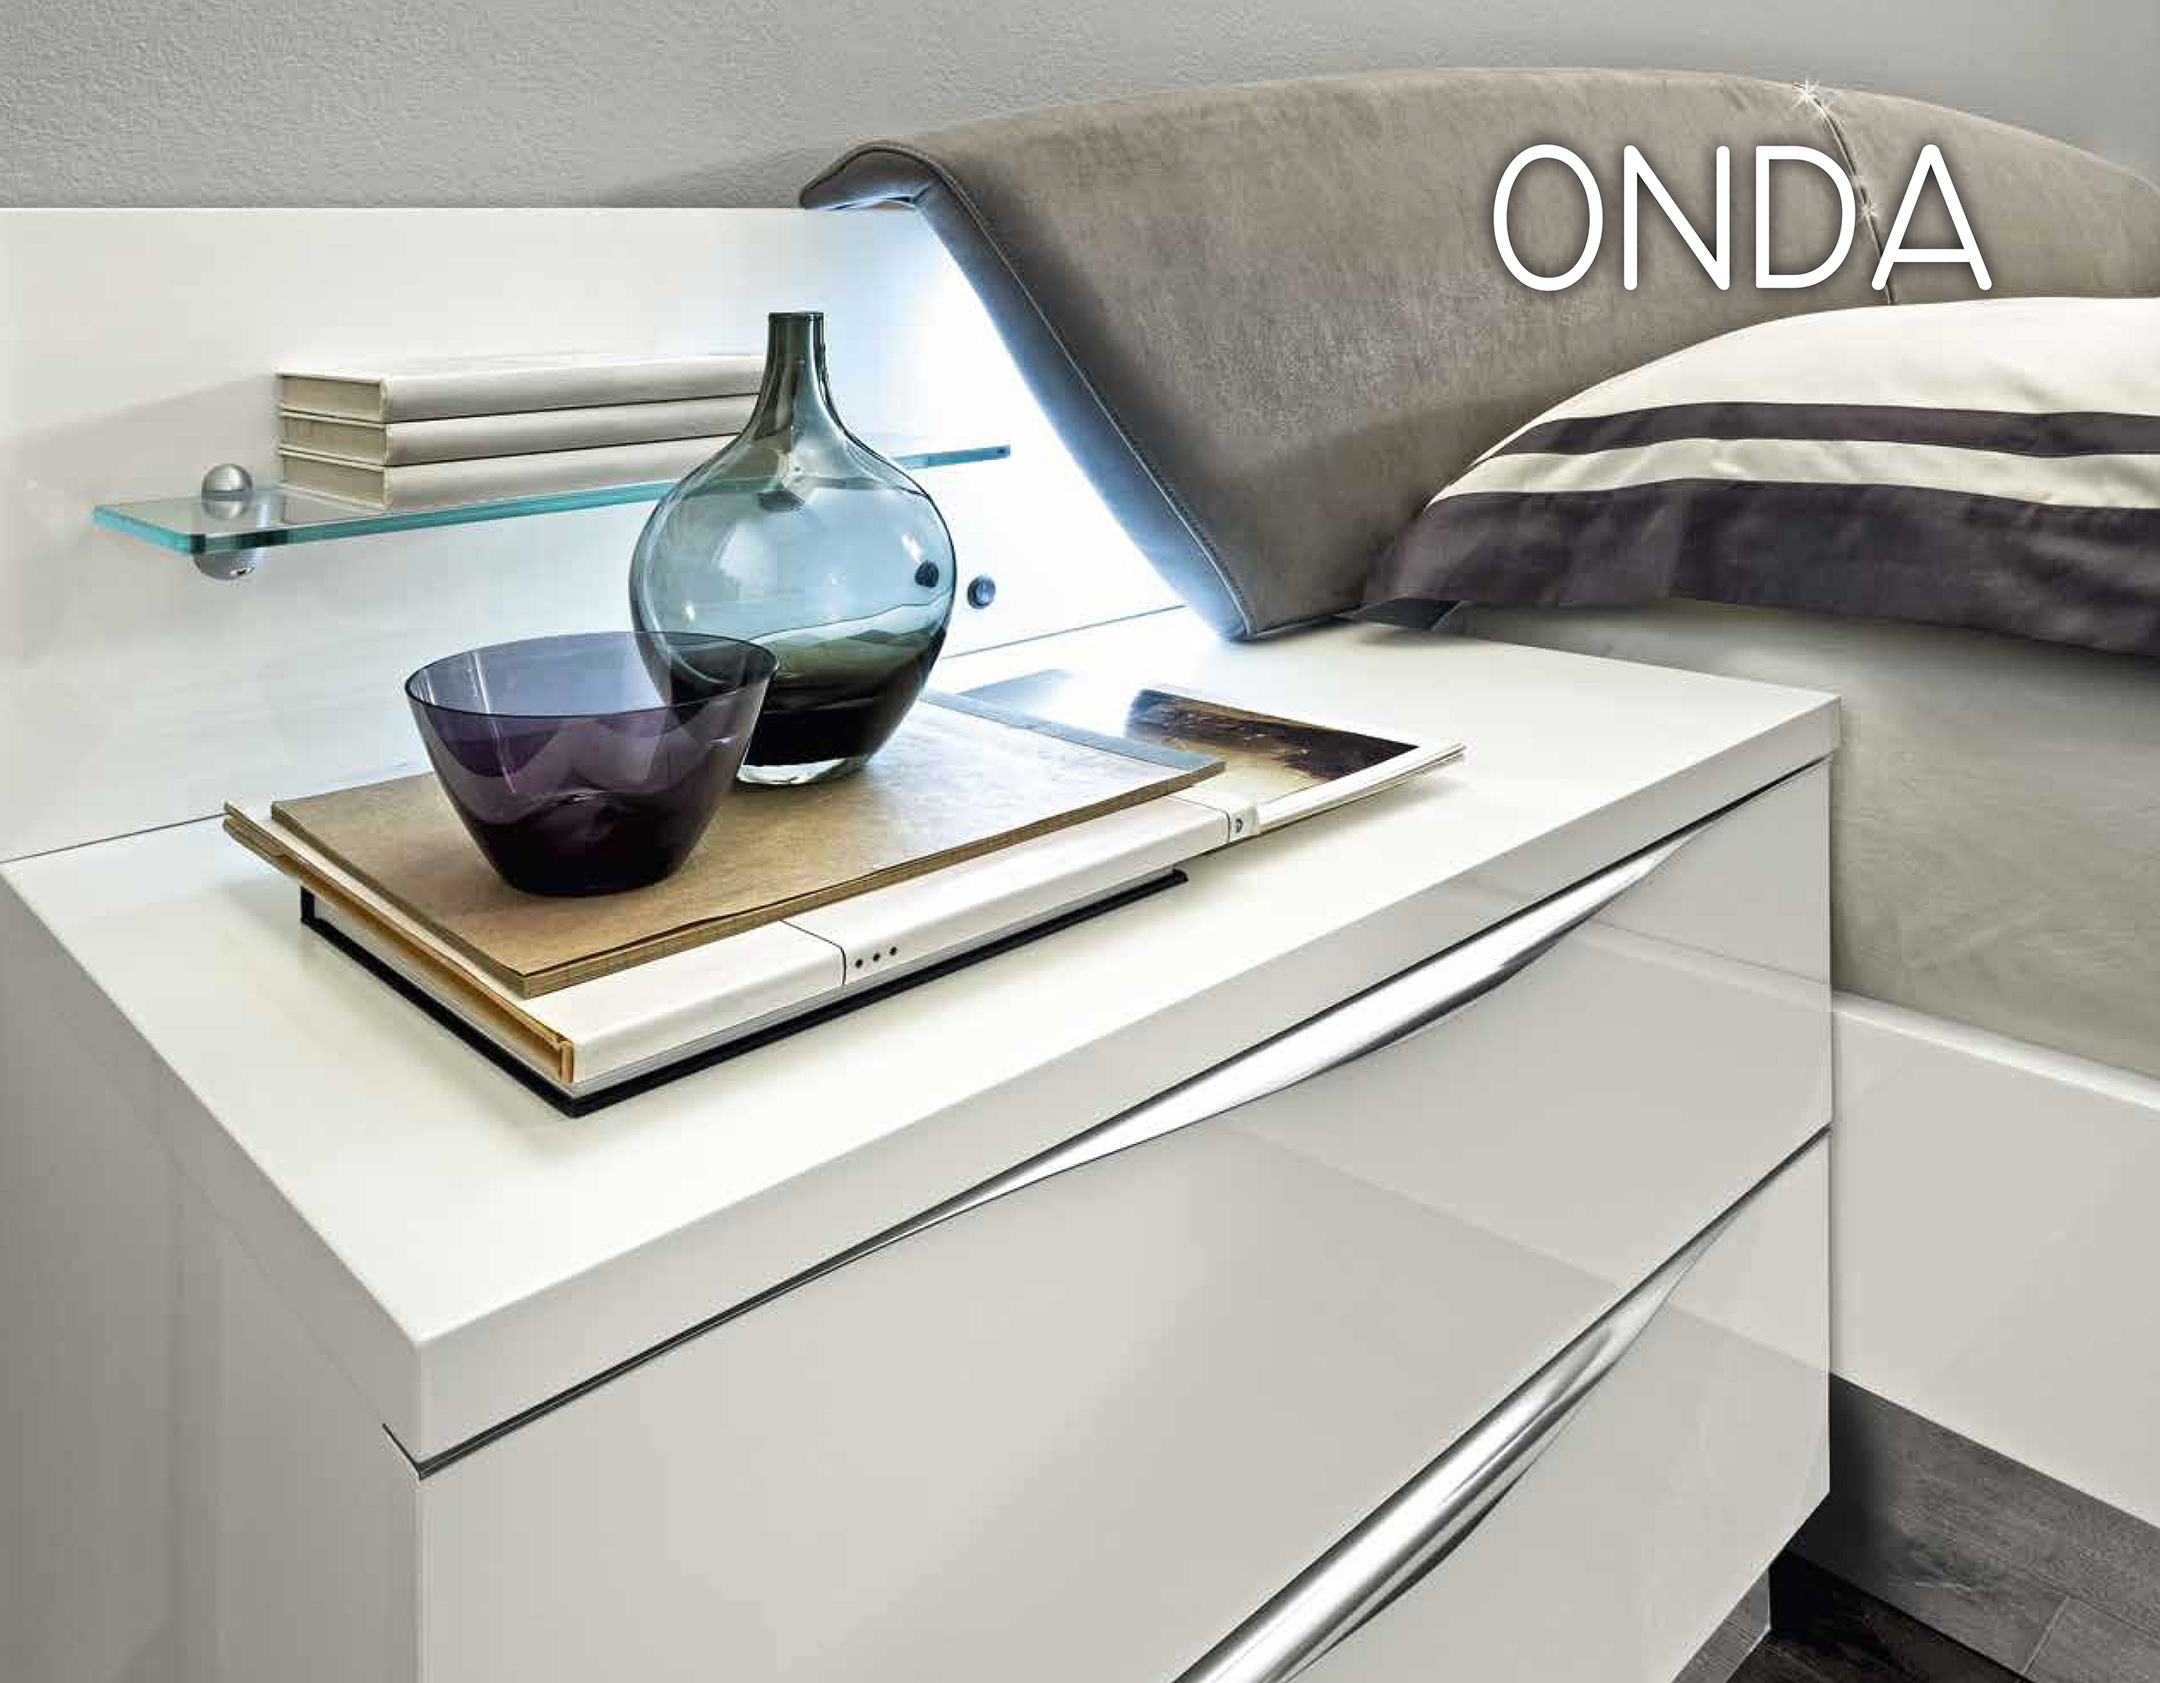 Bedroom Furniture Nightstands Onda White Additional Items